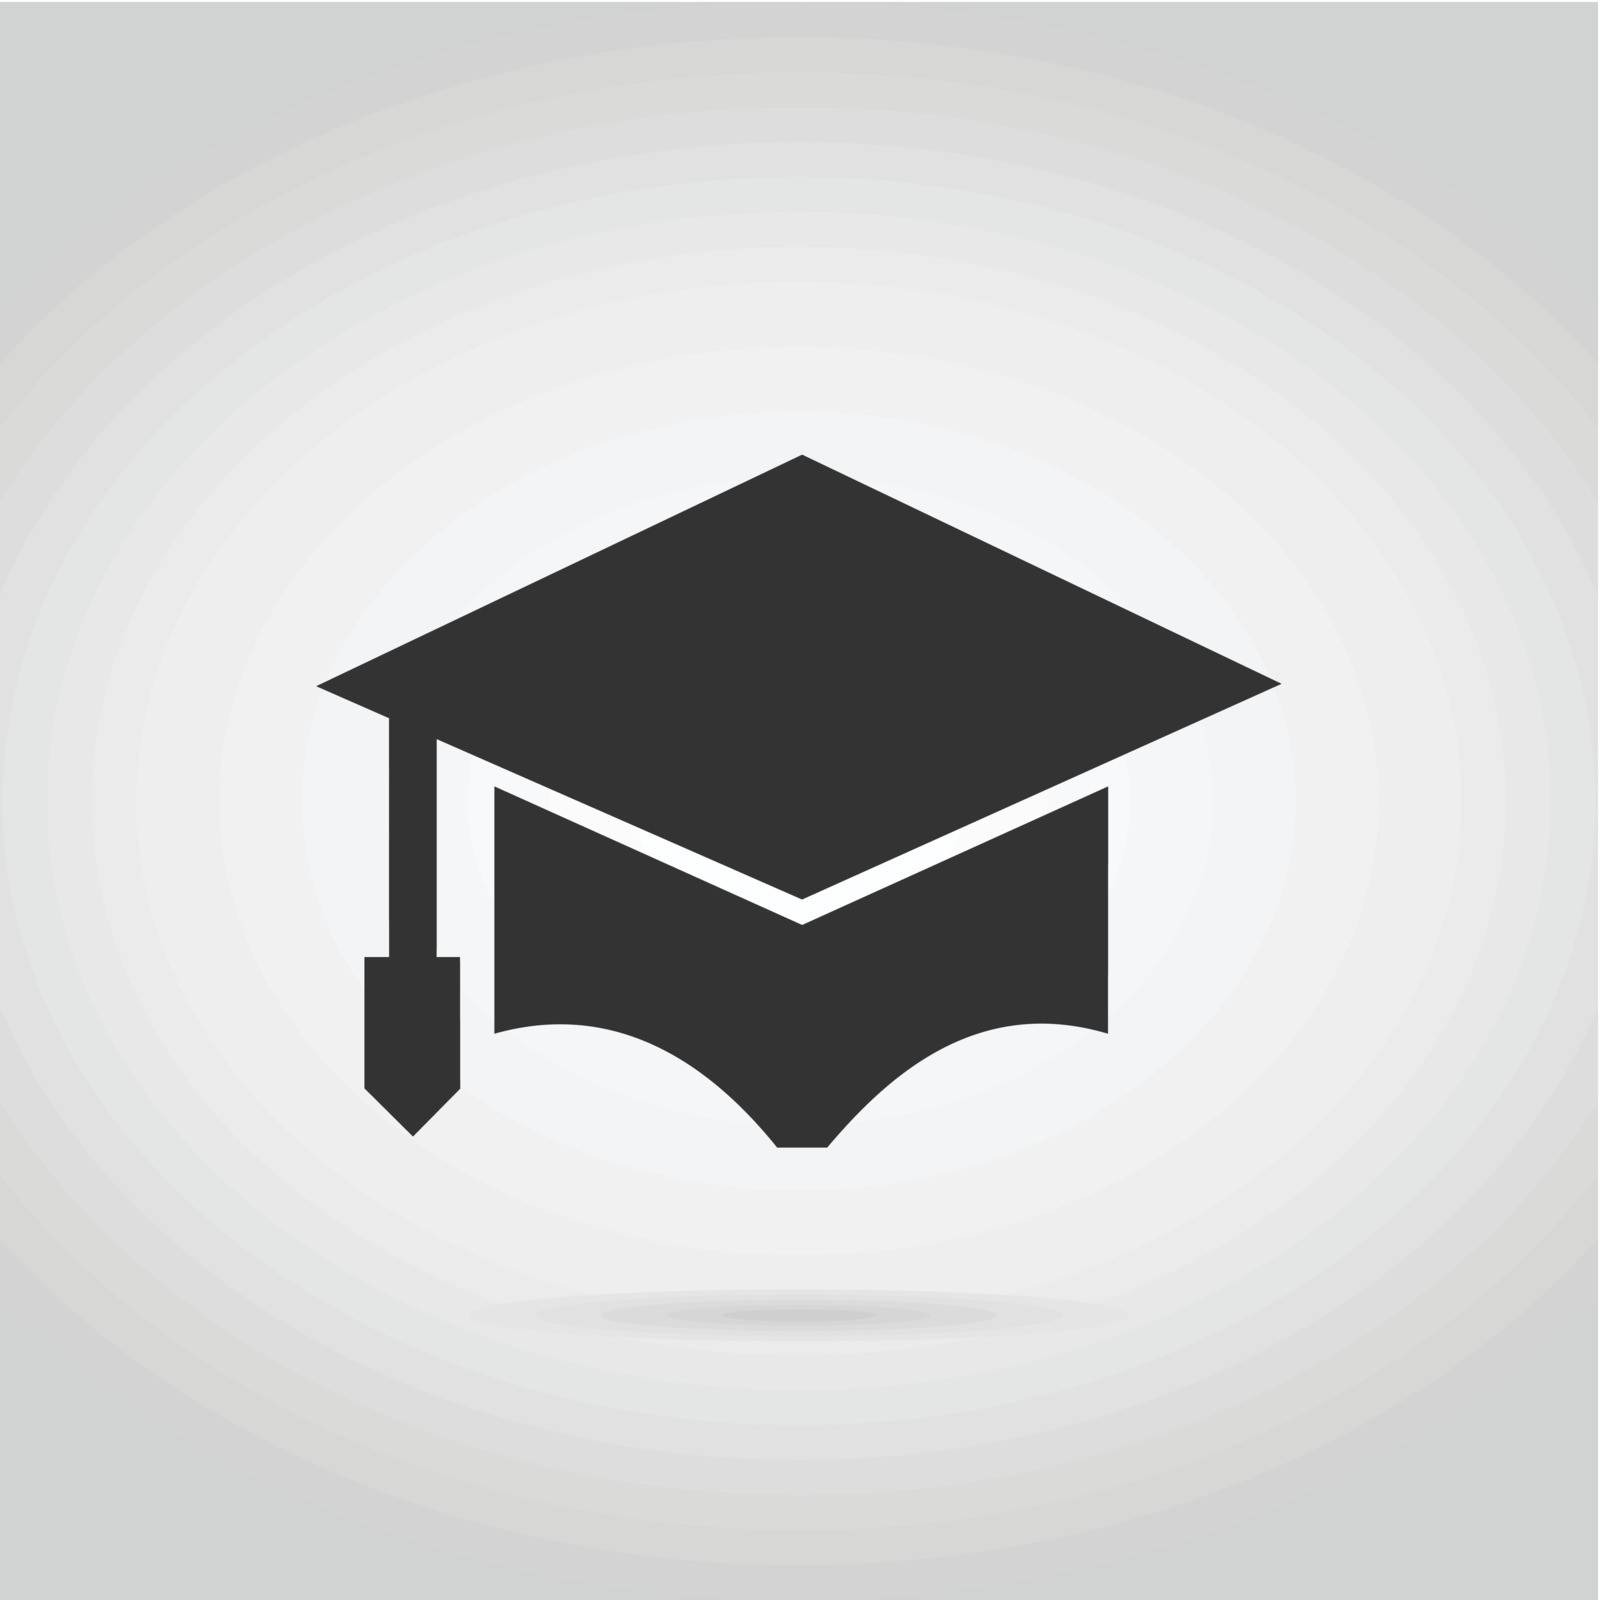 School cap on a grey background. A vector illustration